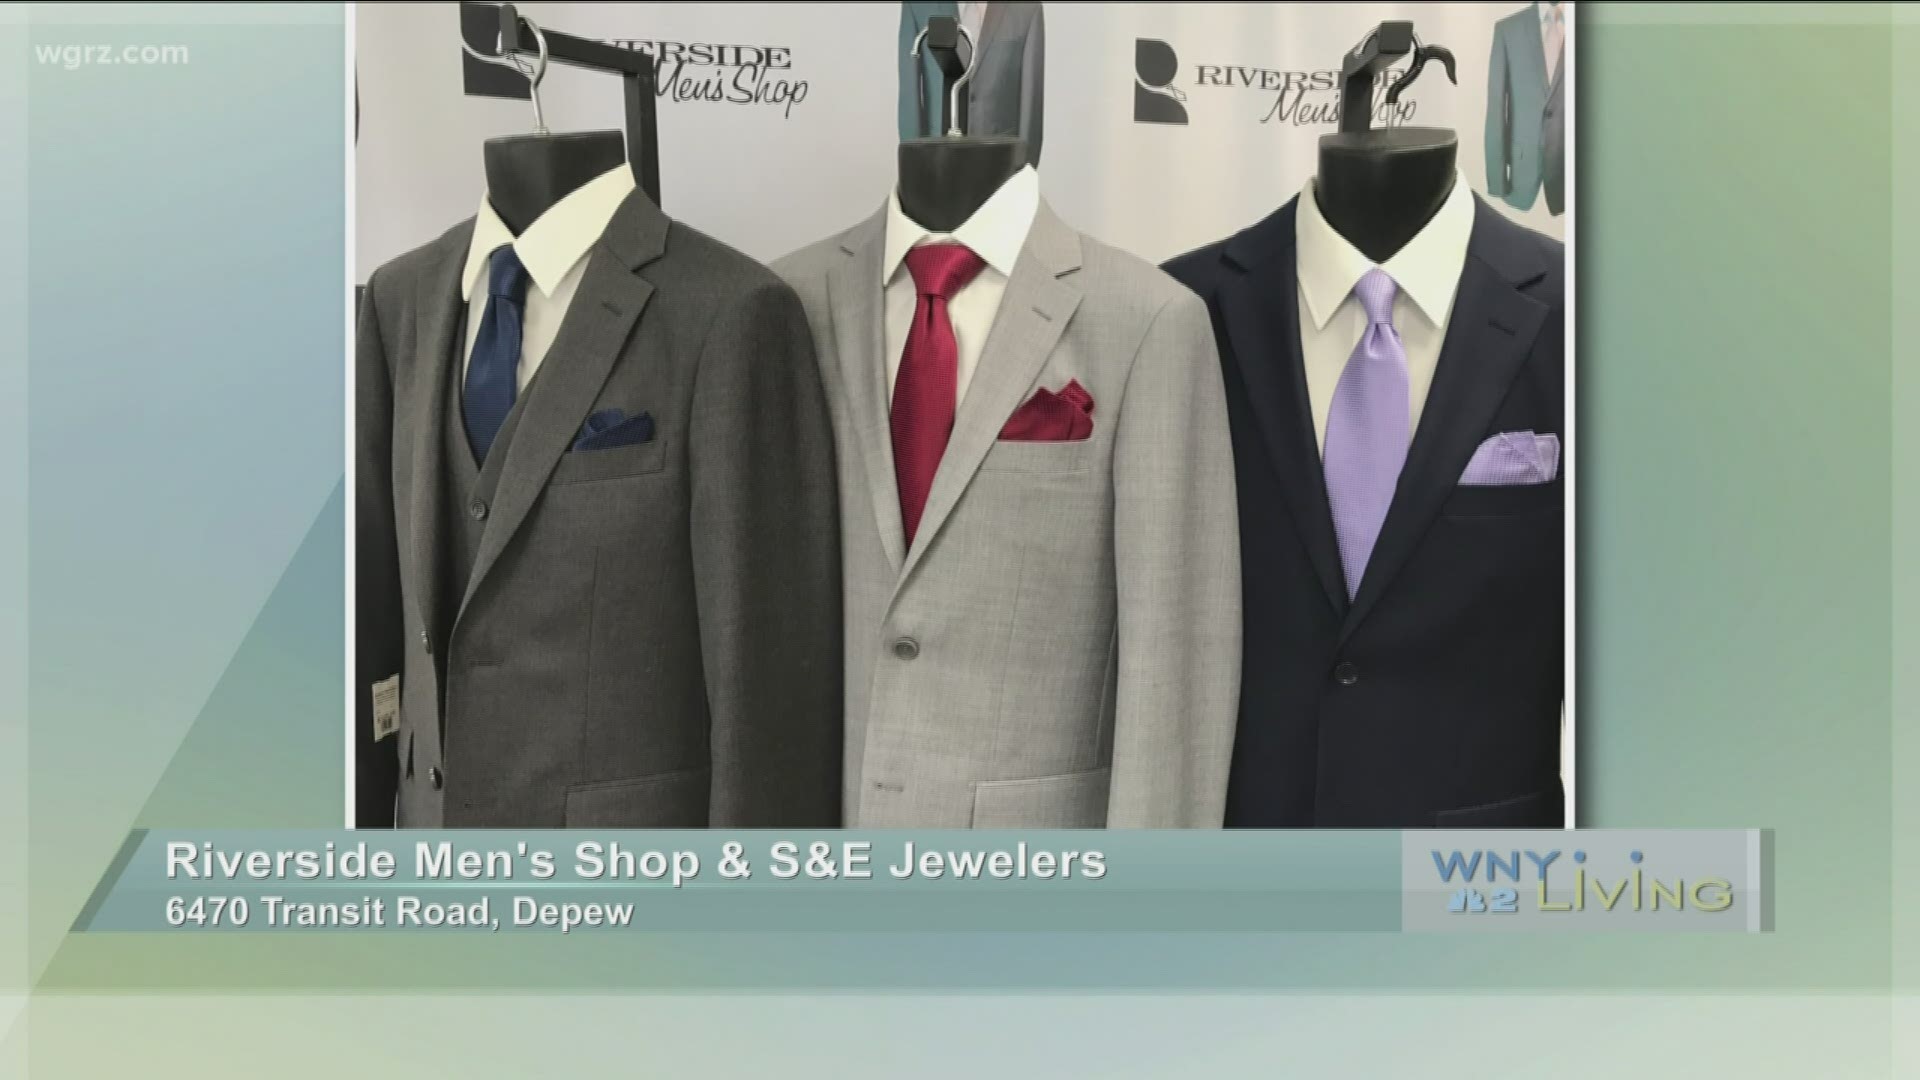 February 15 - Riverside Men’s Shop/S&E Jewelers (THIS VIDEO IS SPONSORED BY RIVERSIDE MEN'S SHOP/S&E JEWELERS)